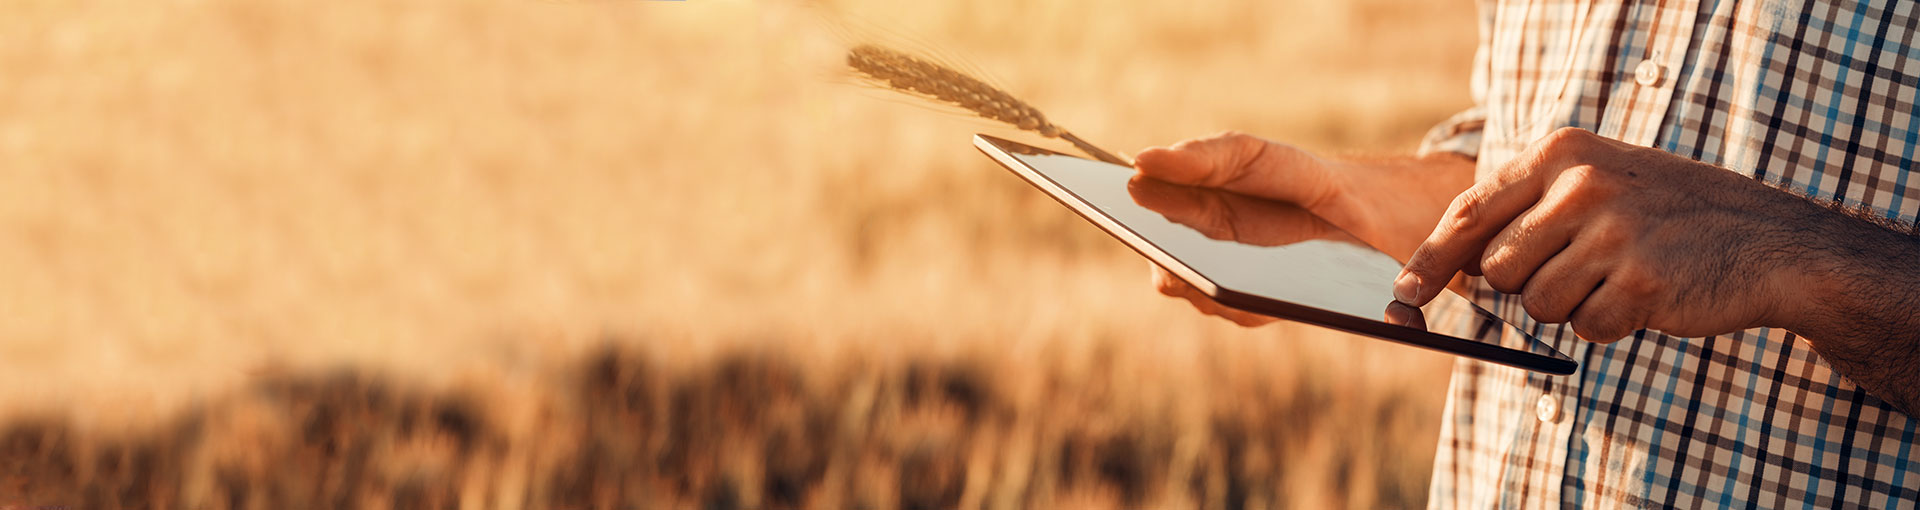 Aplicativos Online Para Agricultura e Propriedades Rurais